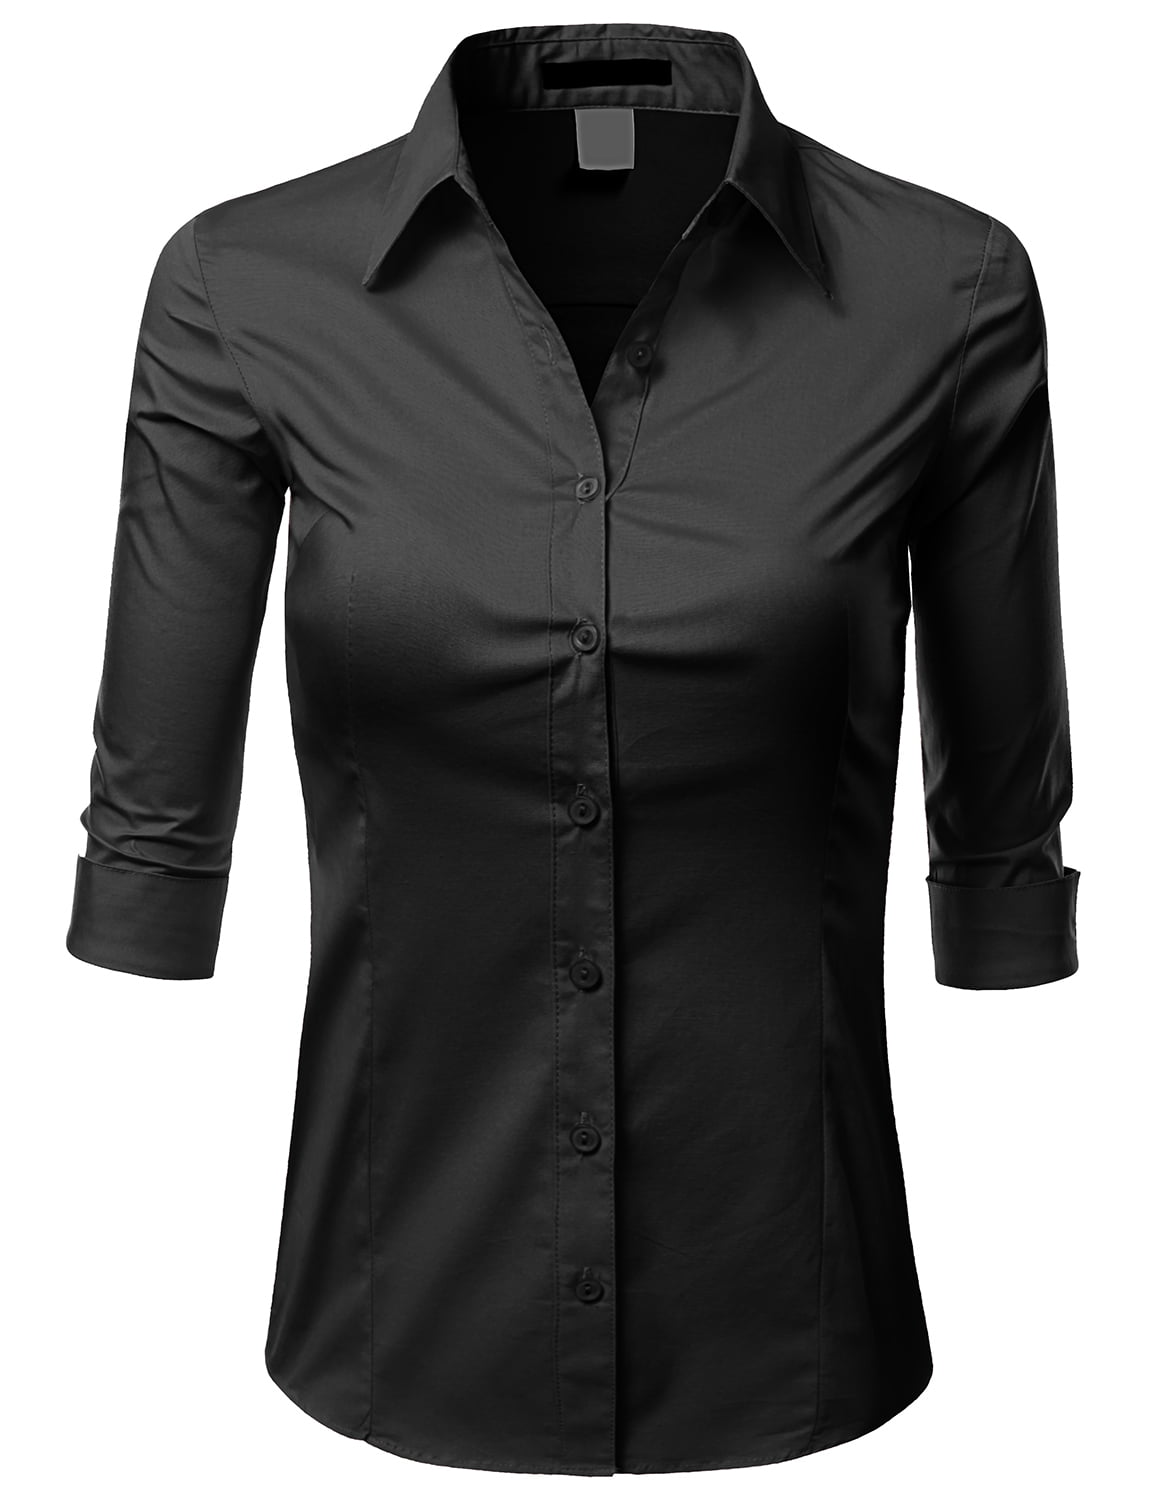 Womens 3 4 Sleeve Cotton Button Down Collared Shirt